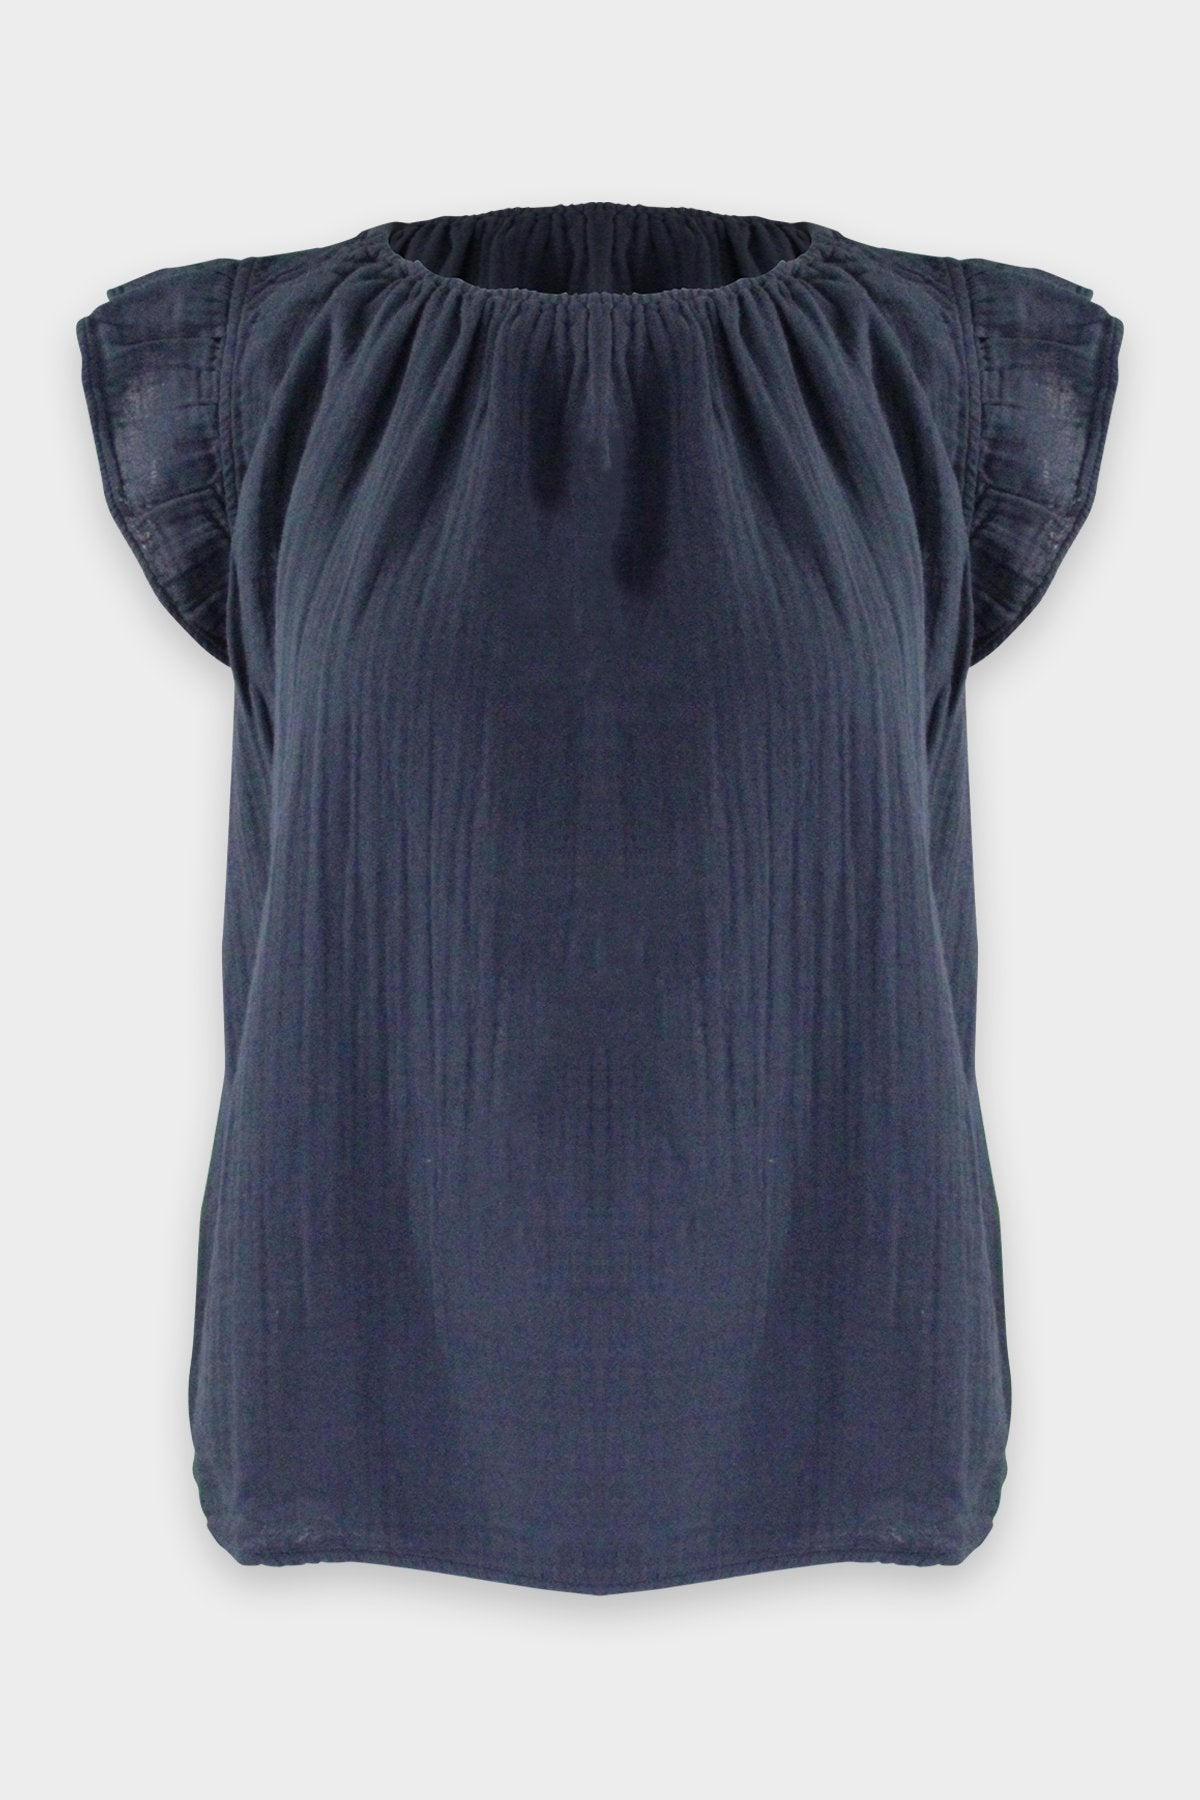 Kaia Short Sleeve Top in Shadow - shop-olivia.com